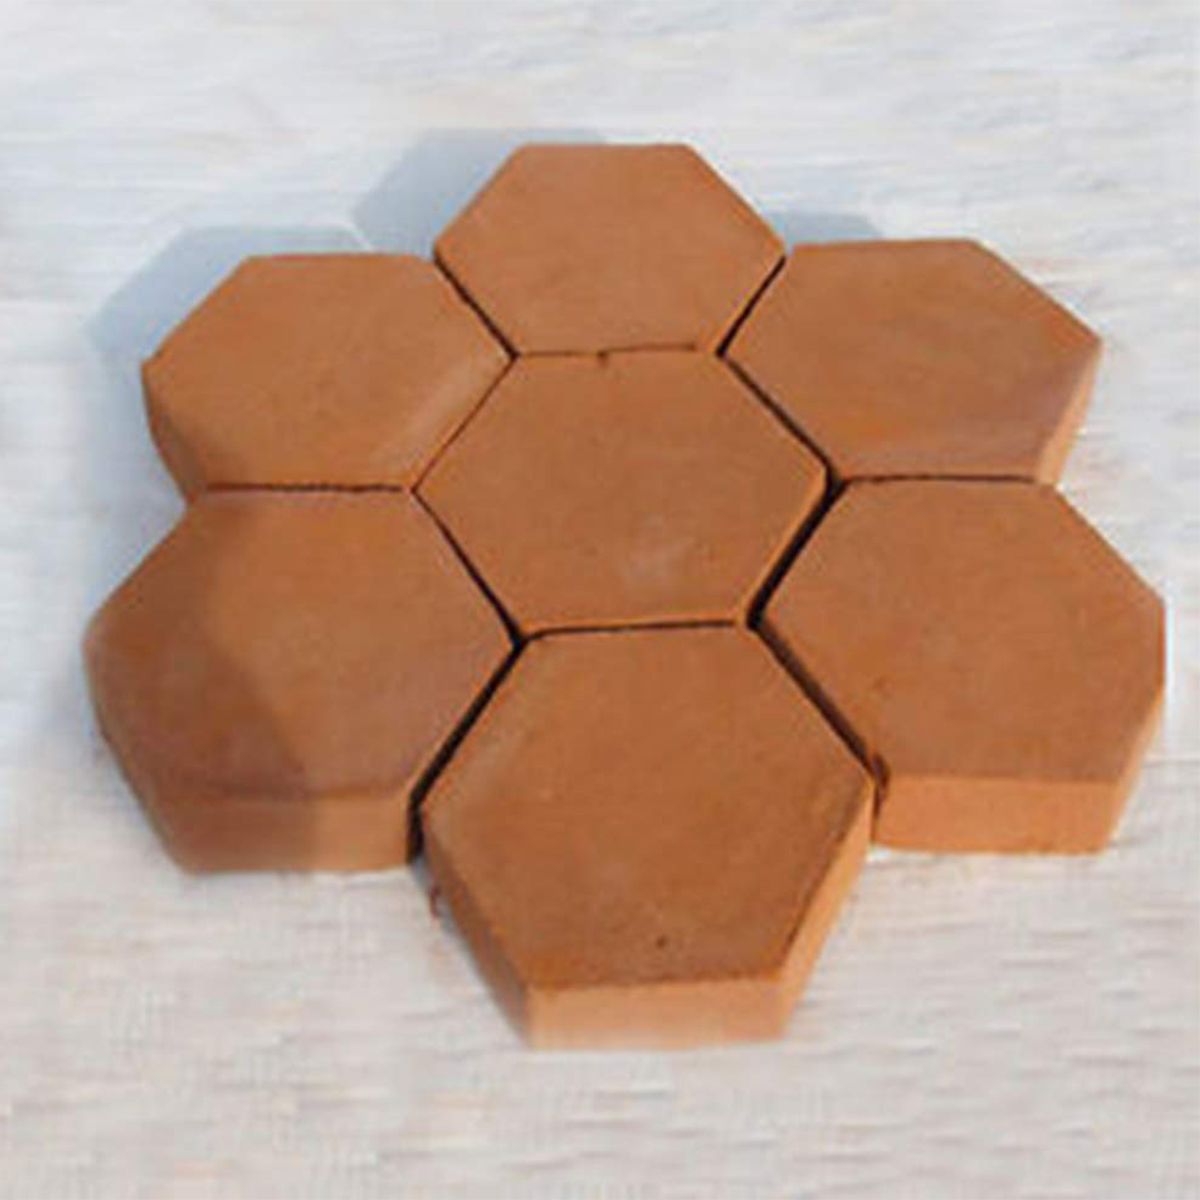 Honeycomb-Hexagon-Walk-Maker-Stepping-Stone-Reusable-Paver-Molds-Brick-Mould-Cement-Brick-Mold-DIY-G-1521991